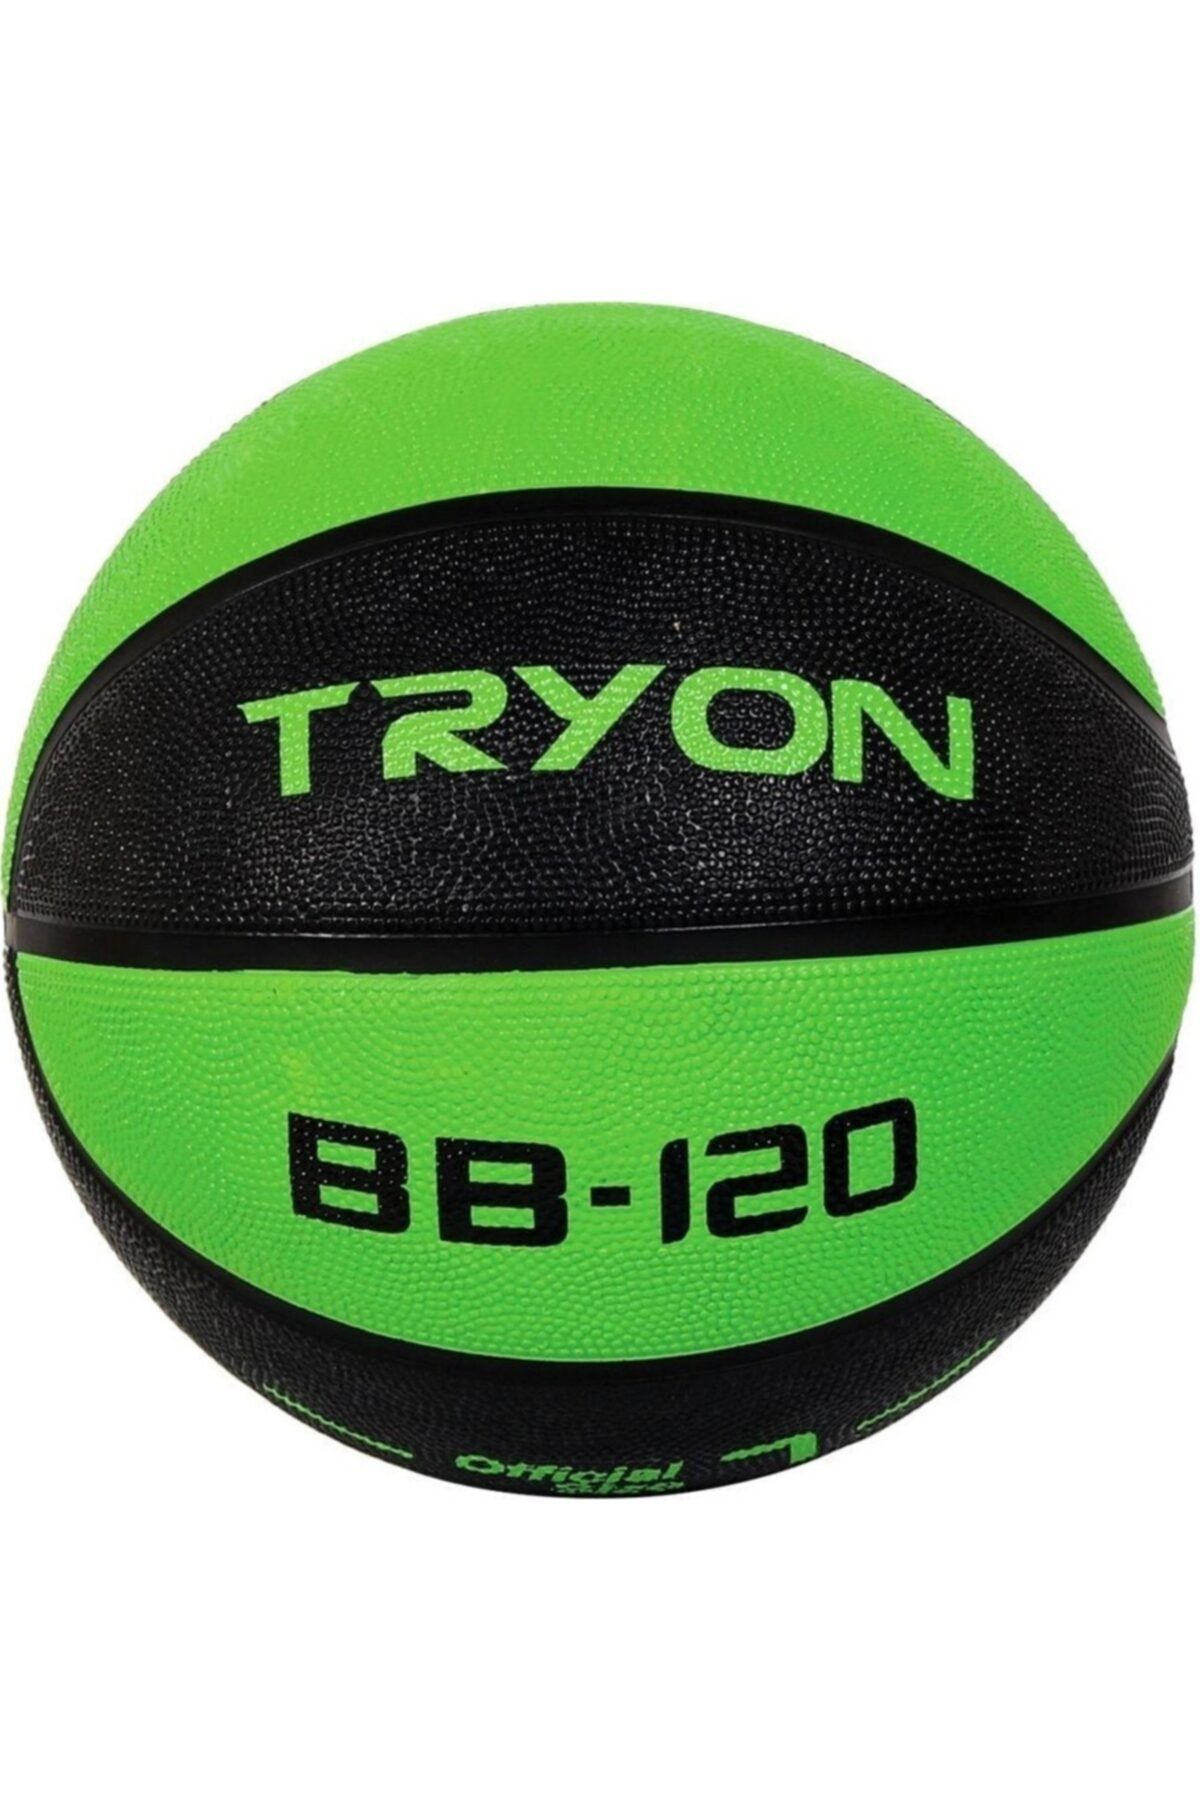 TRYON Basketbol Topu 7 Numara Siyah-yeşil Bb-120